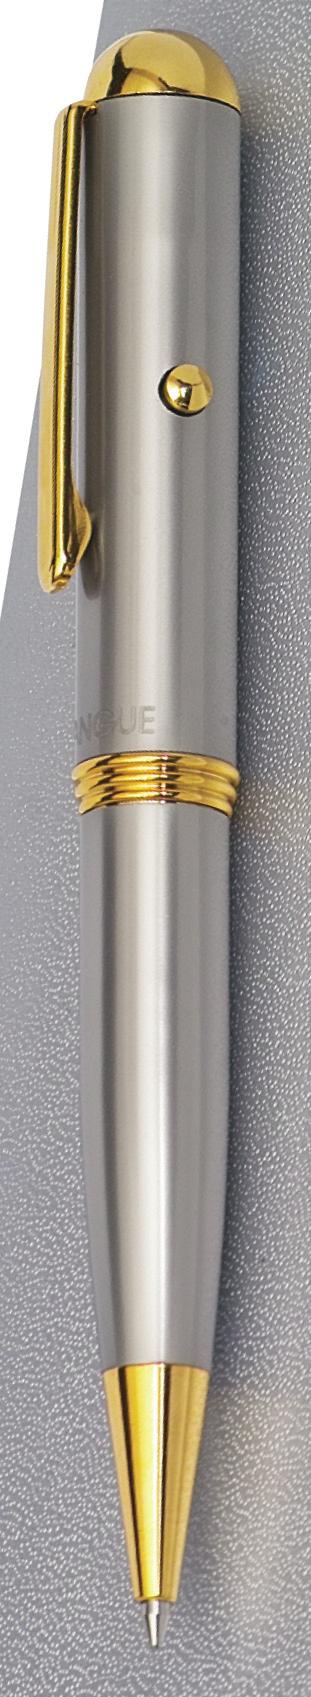 max (Class 111a) - Pen uses 1 Merangue ME-8 refill - Deluxe silver gift box - Free bonus laser pointer